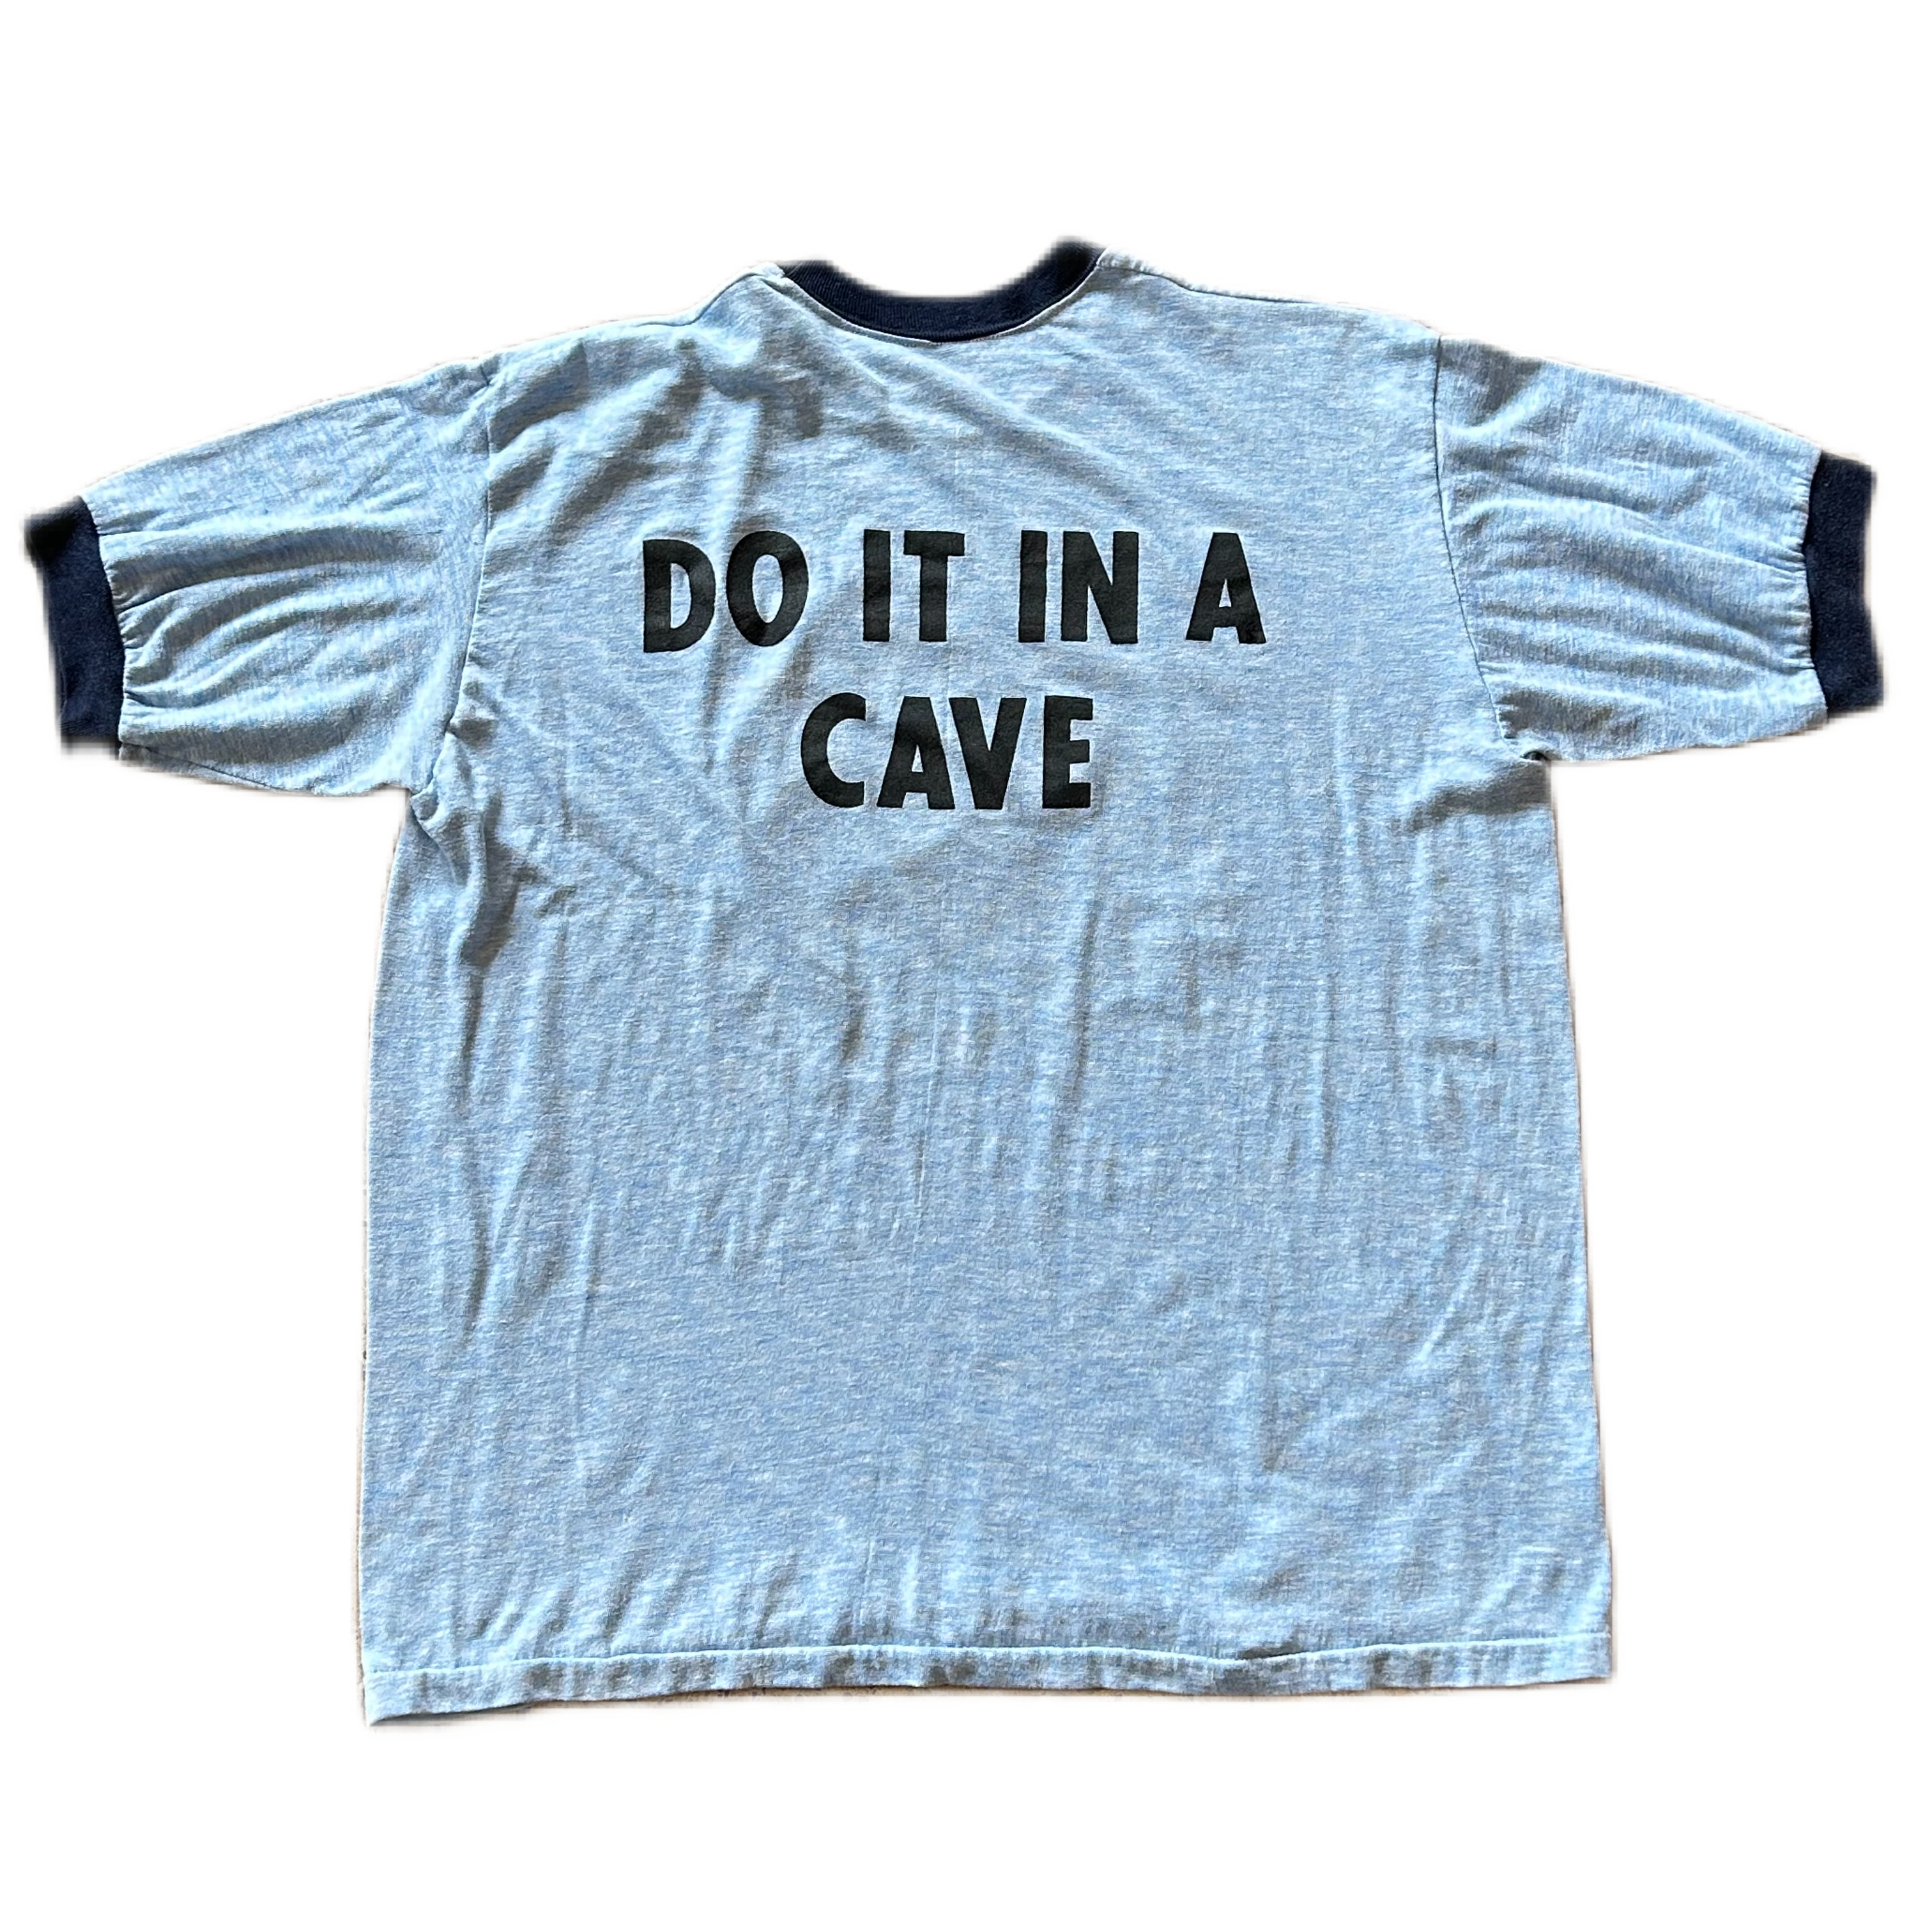 Vintage 1980s Carlsbad caverns ringer tee